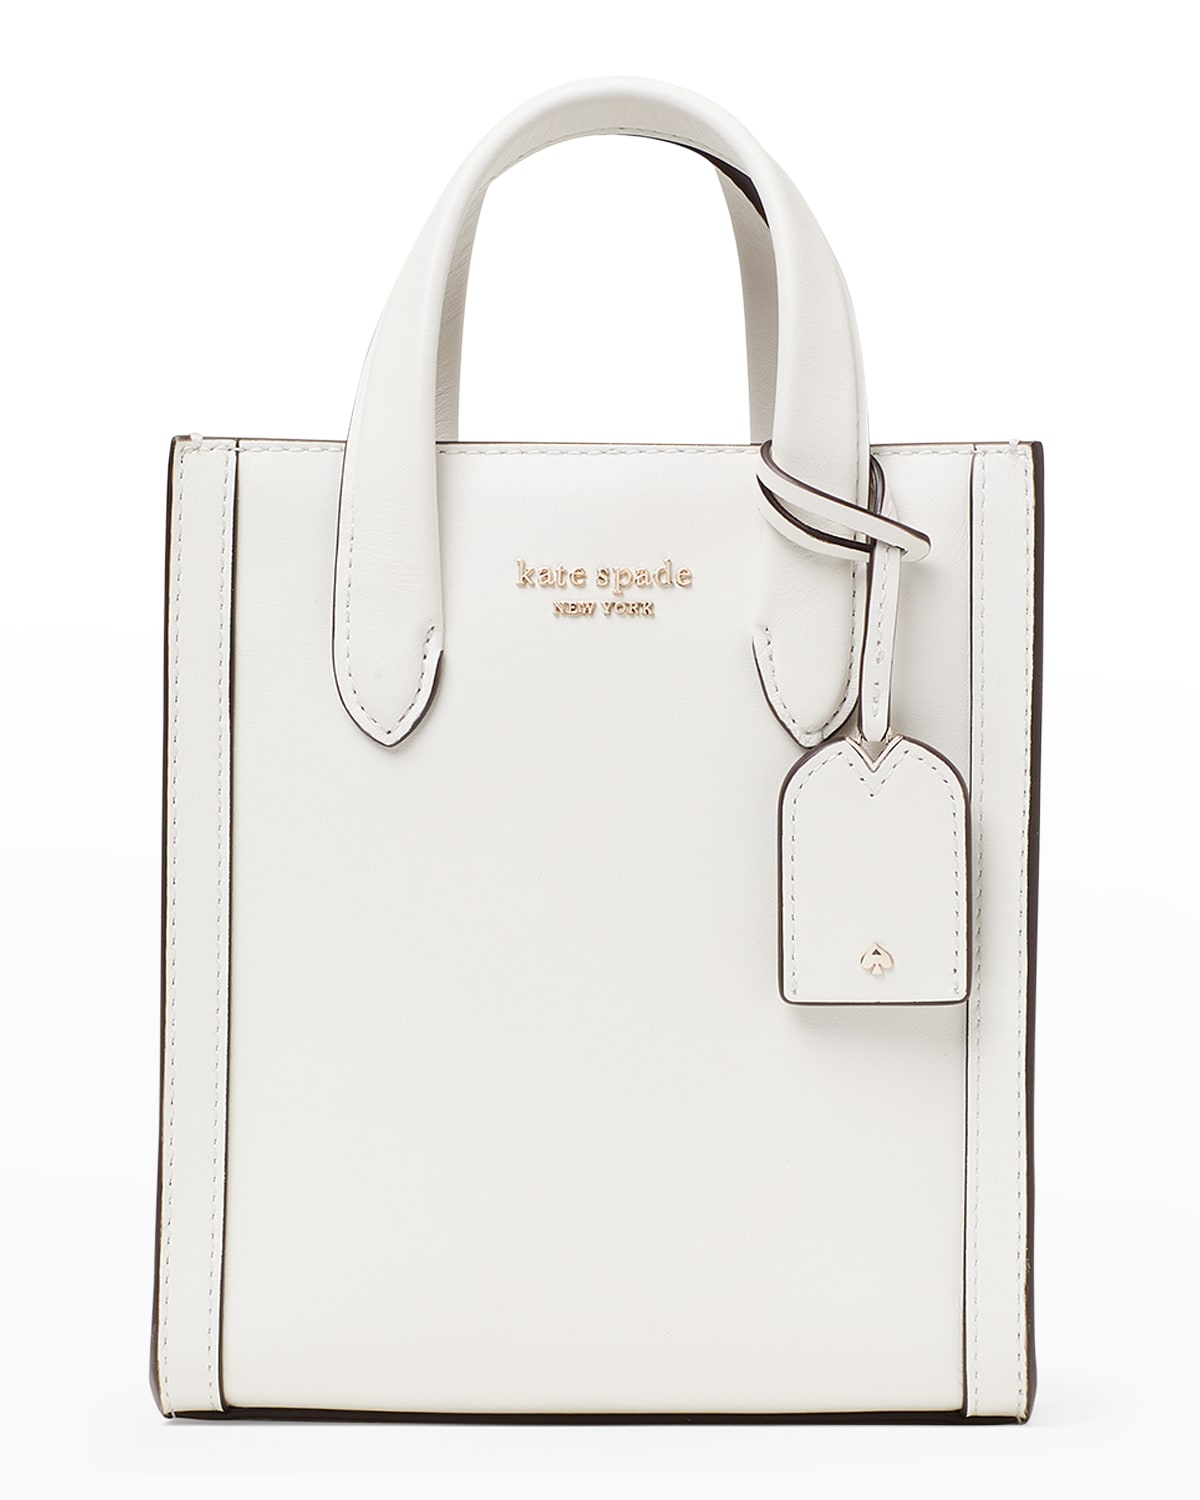 White Manhattan mini leather cross-body bag